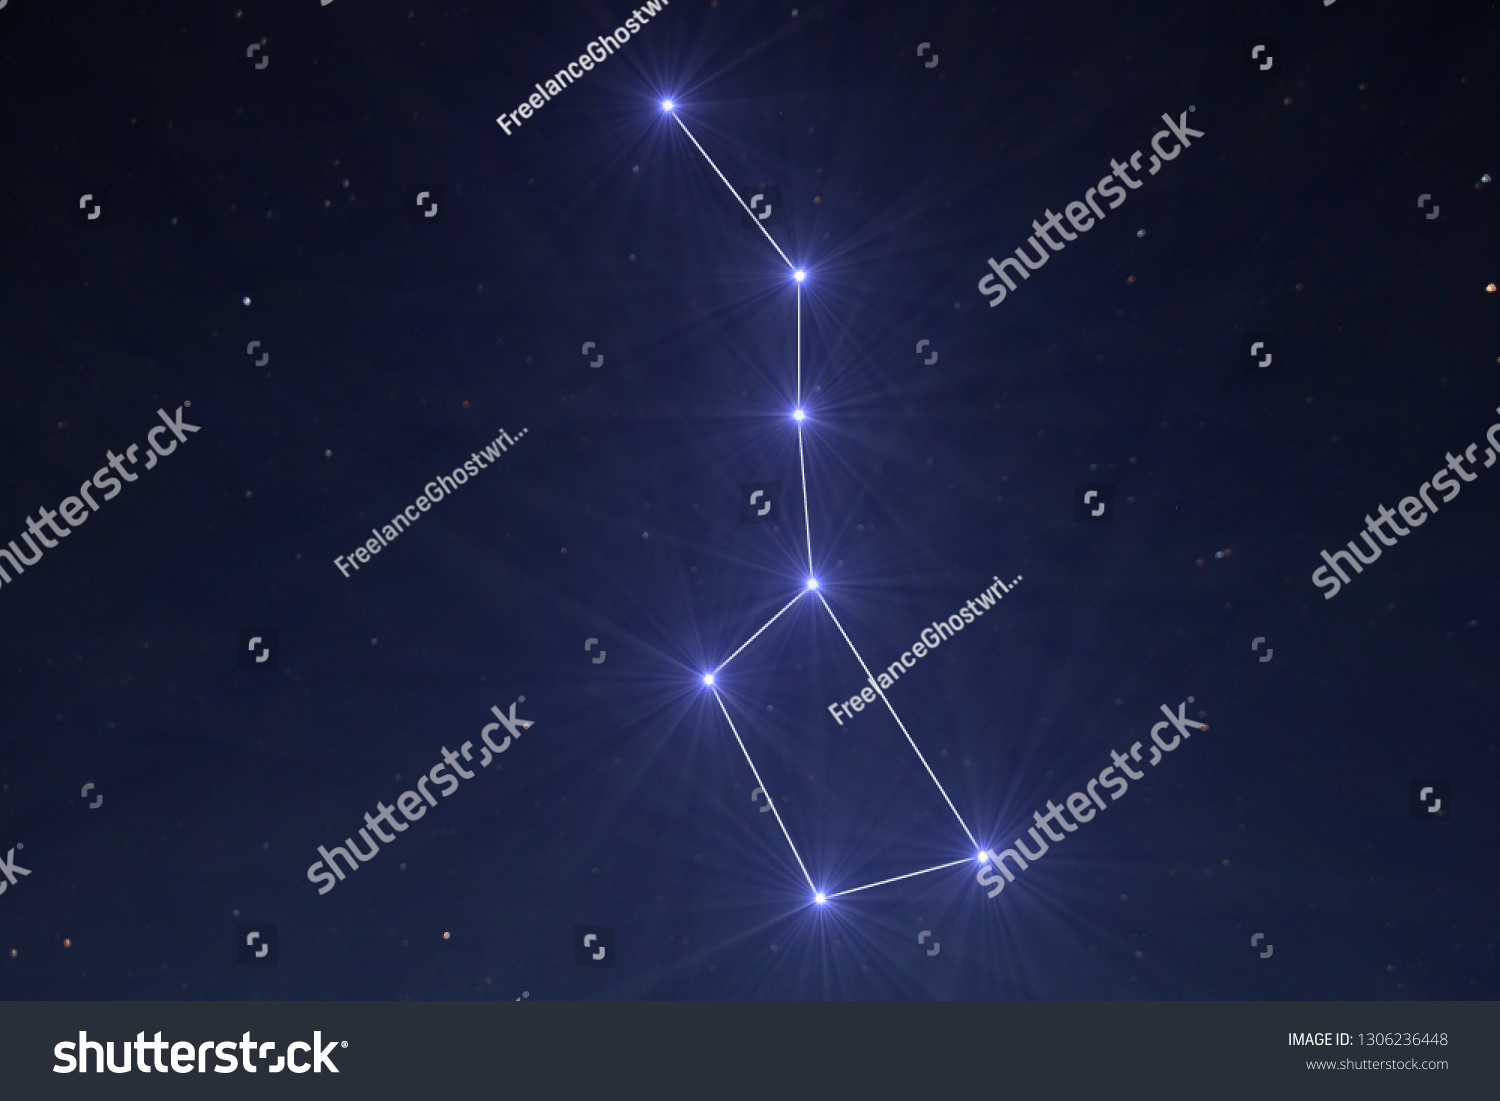 Big Dipper (Ursa Major) with stars highlighted #1306236448